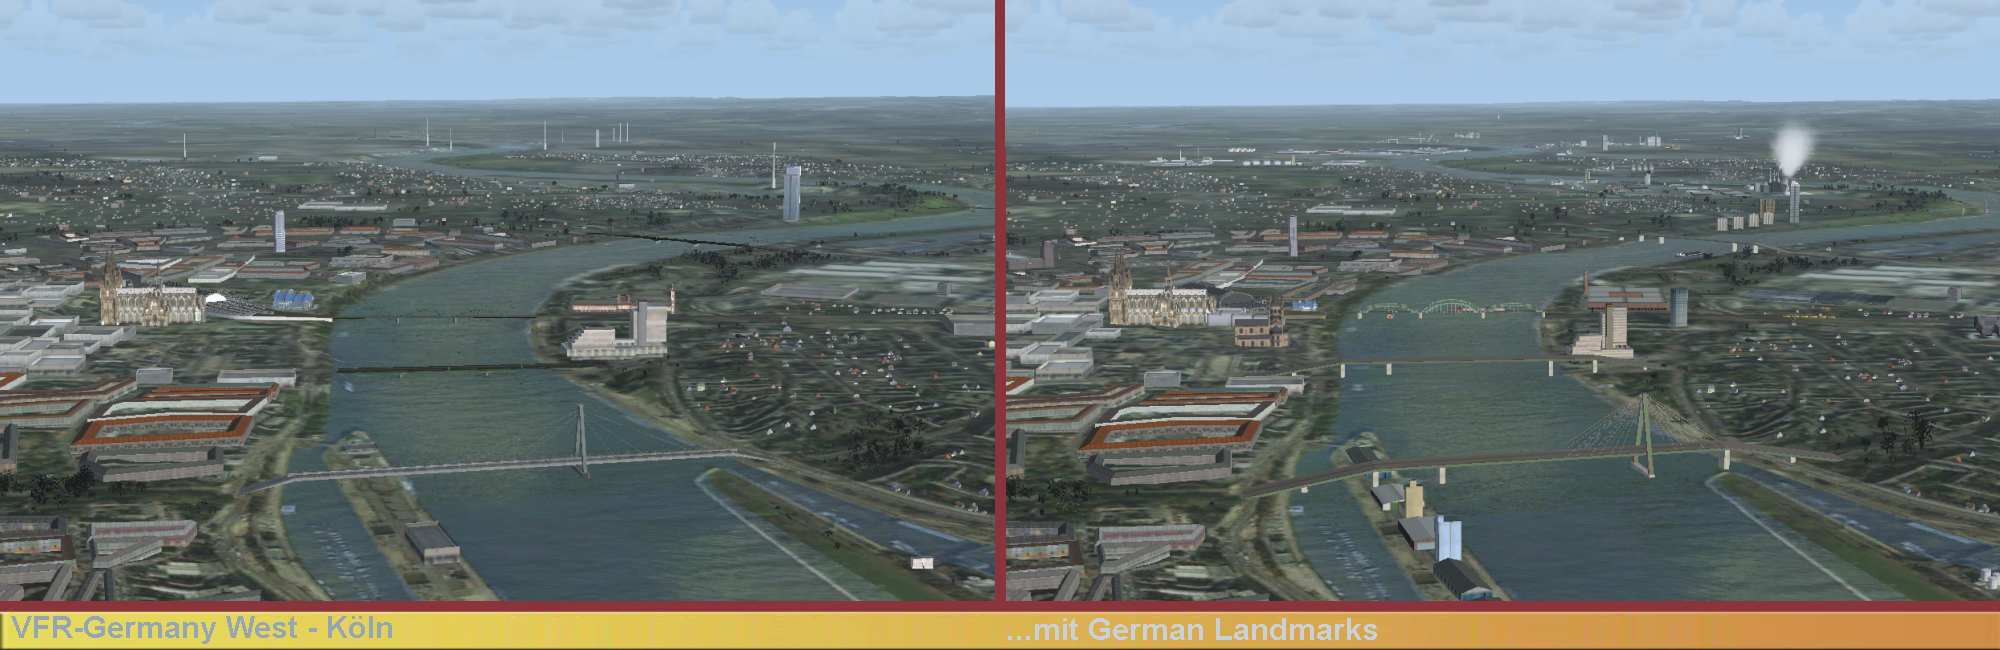 German_Landmarks-VFR-Germany_05.jpg